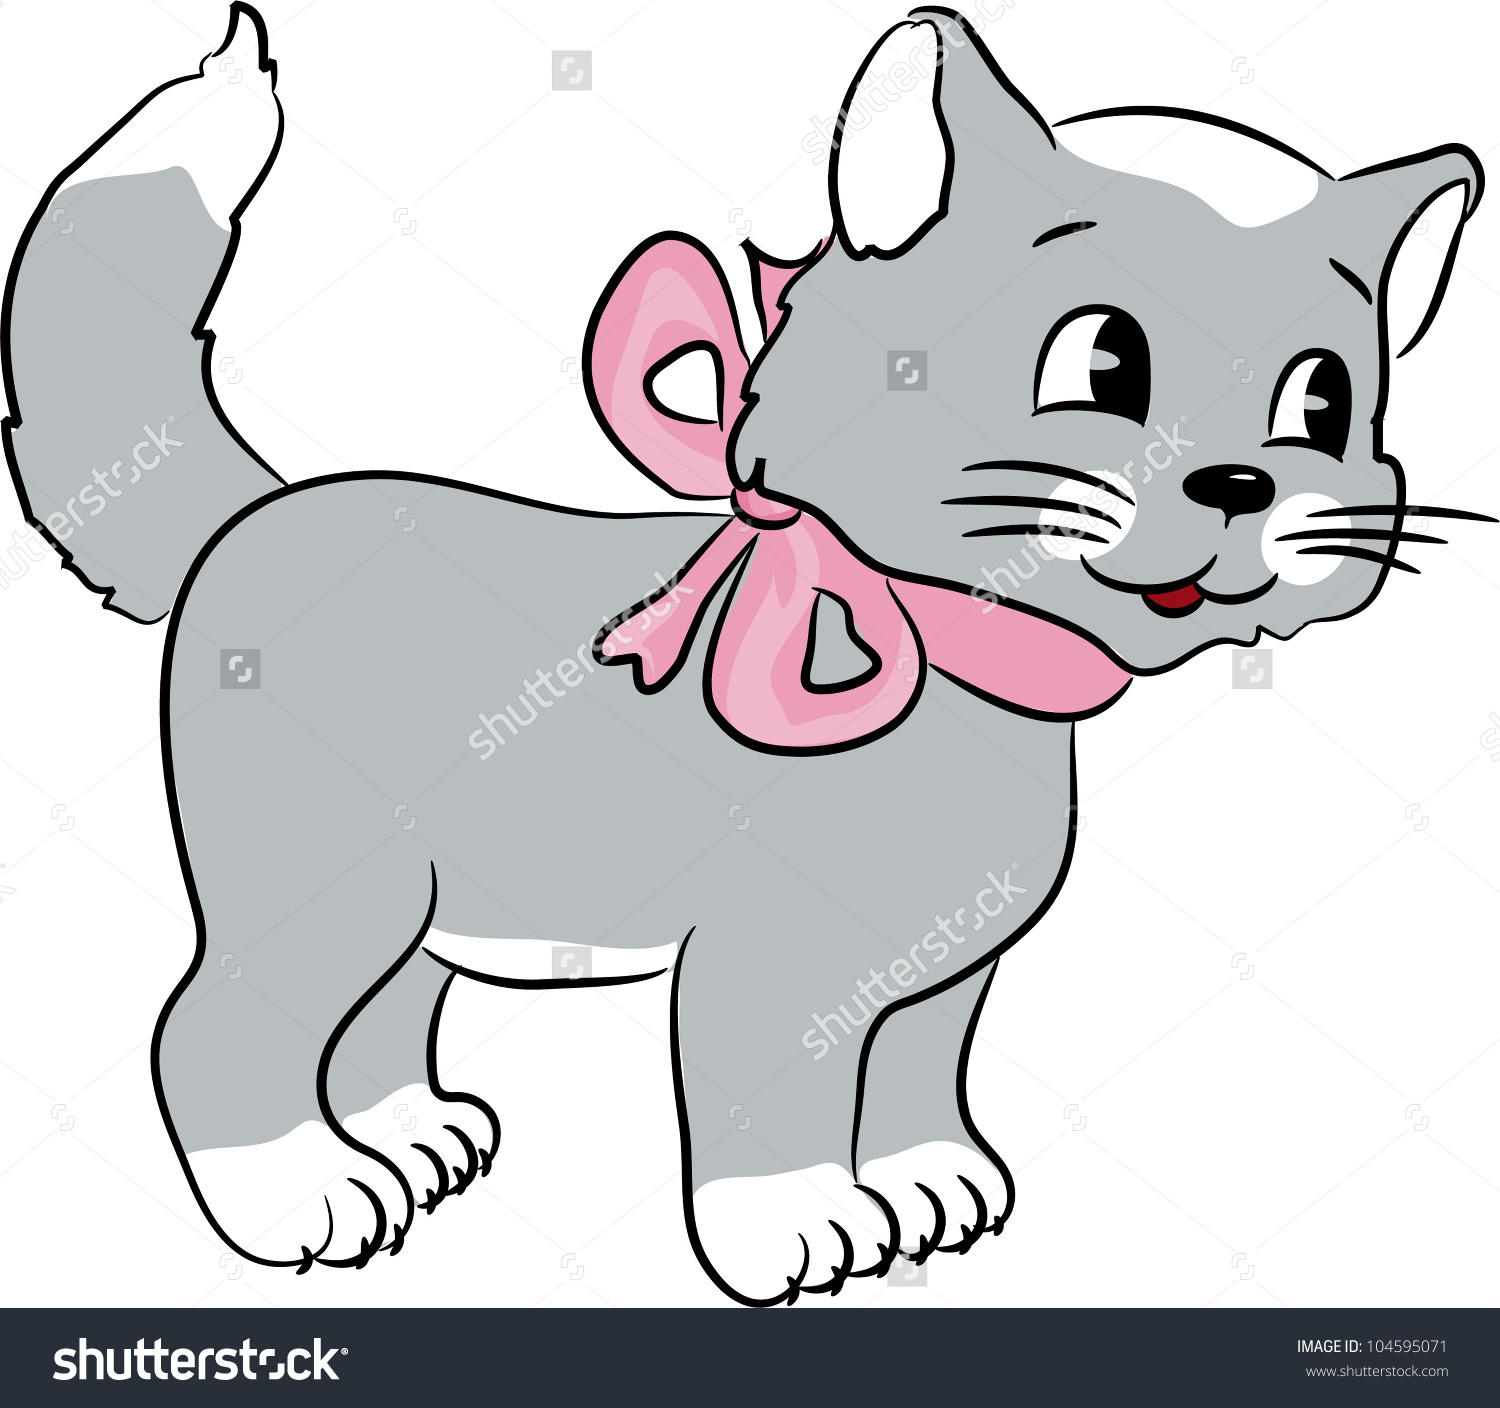  Contoh  Gambar  Mewarnai Gambar  Kucing  Kartun  KataUcap